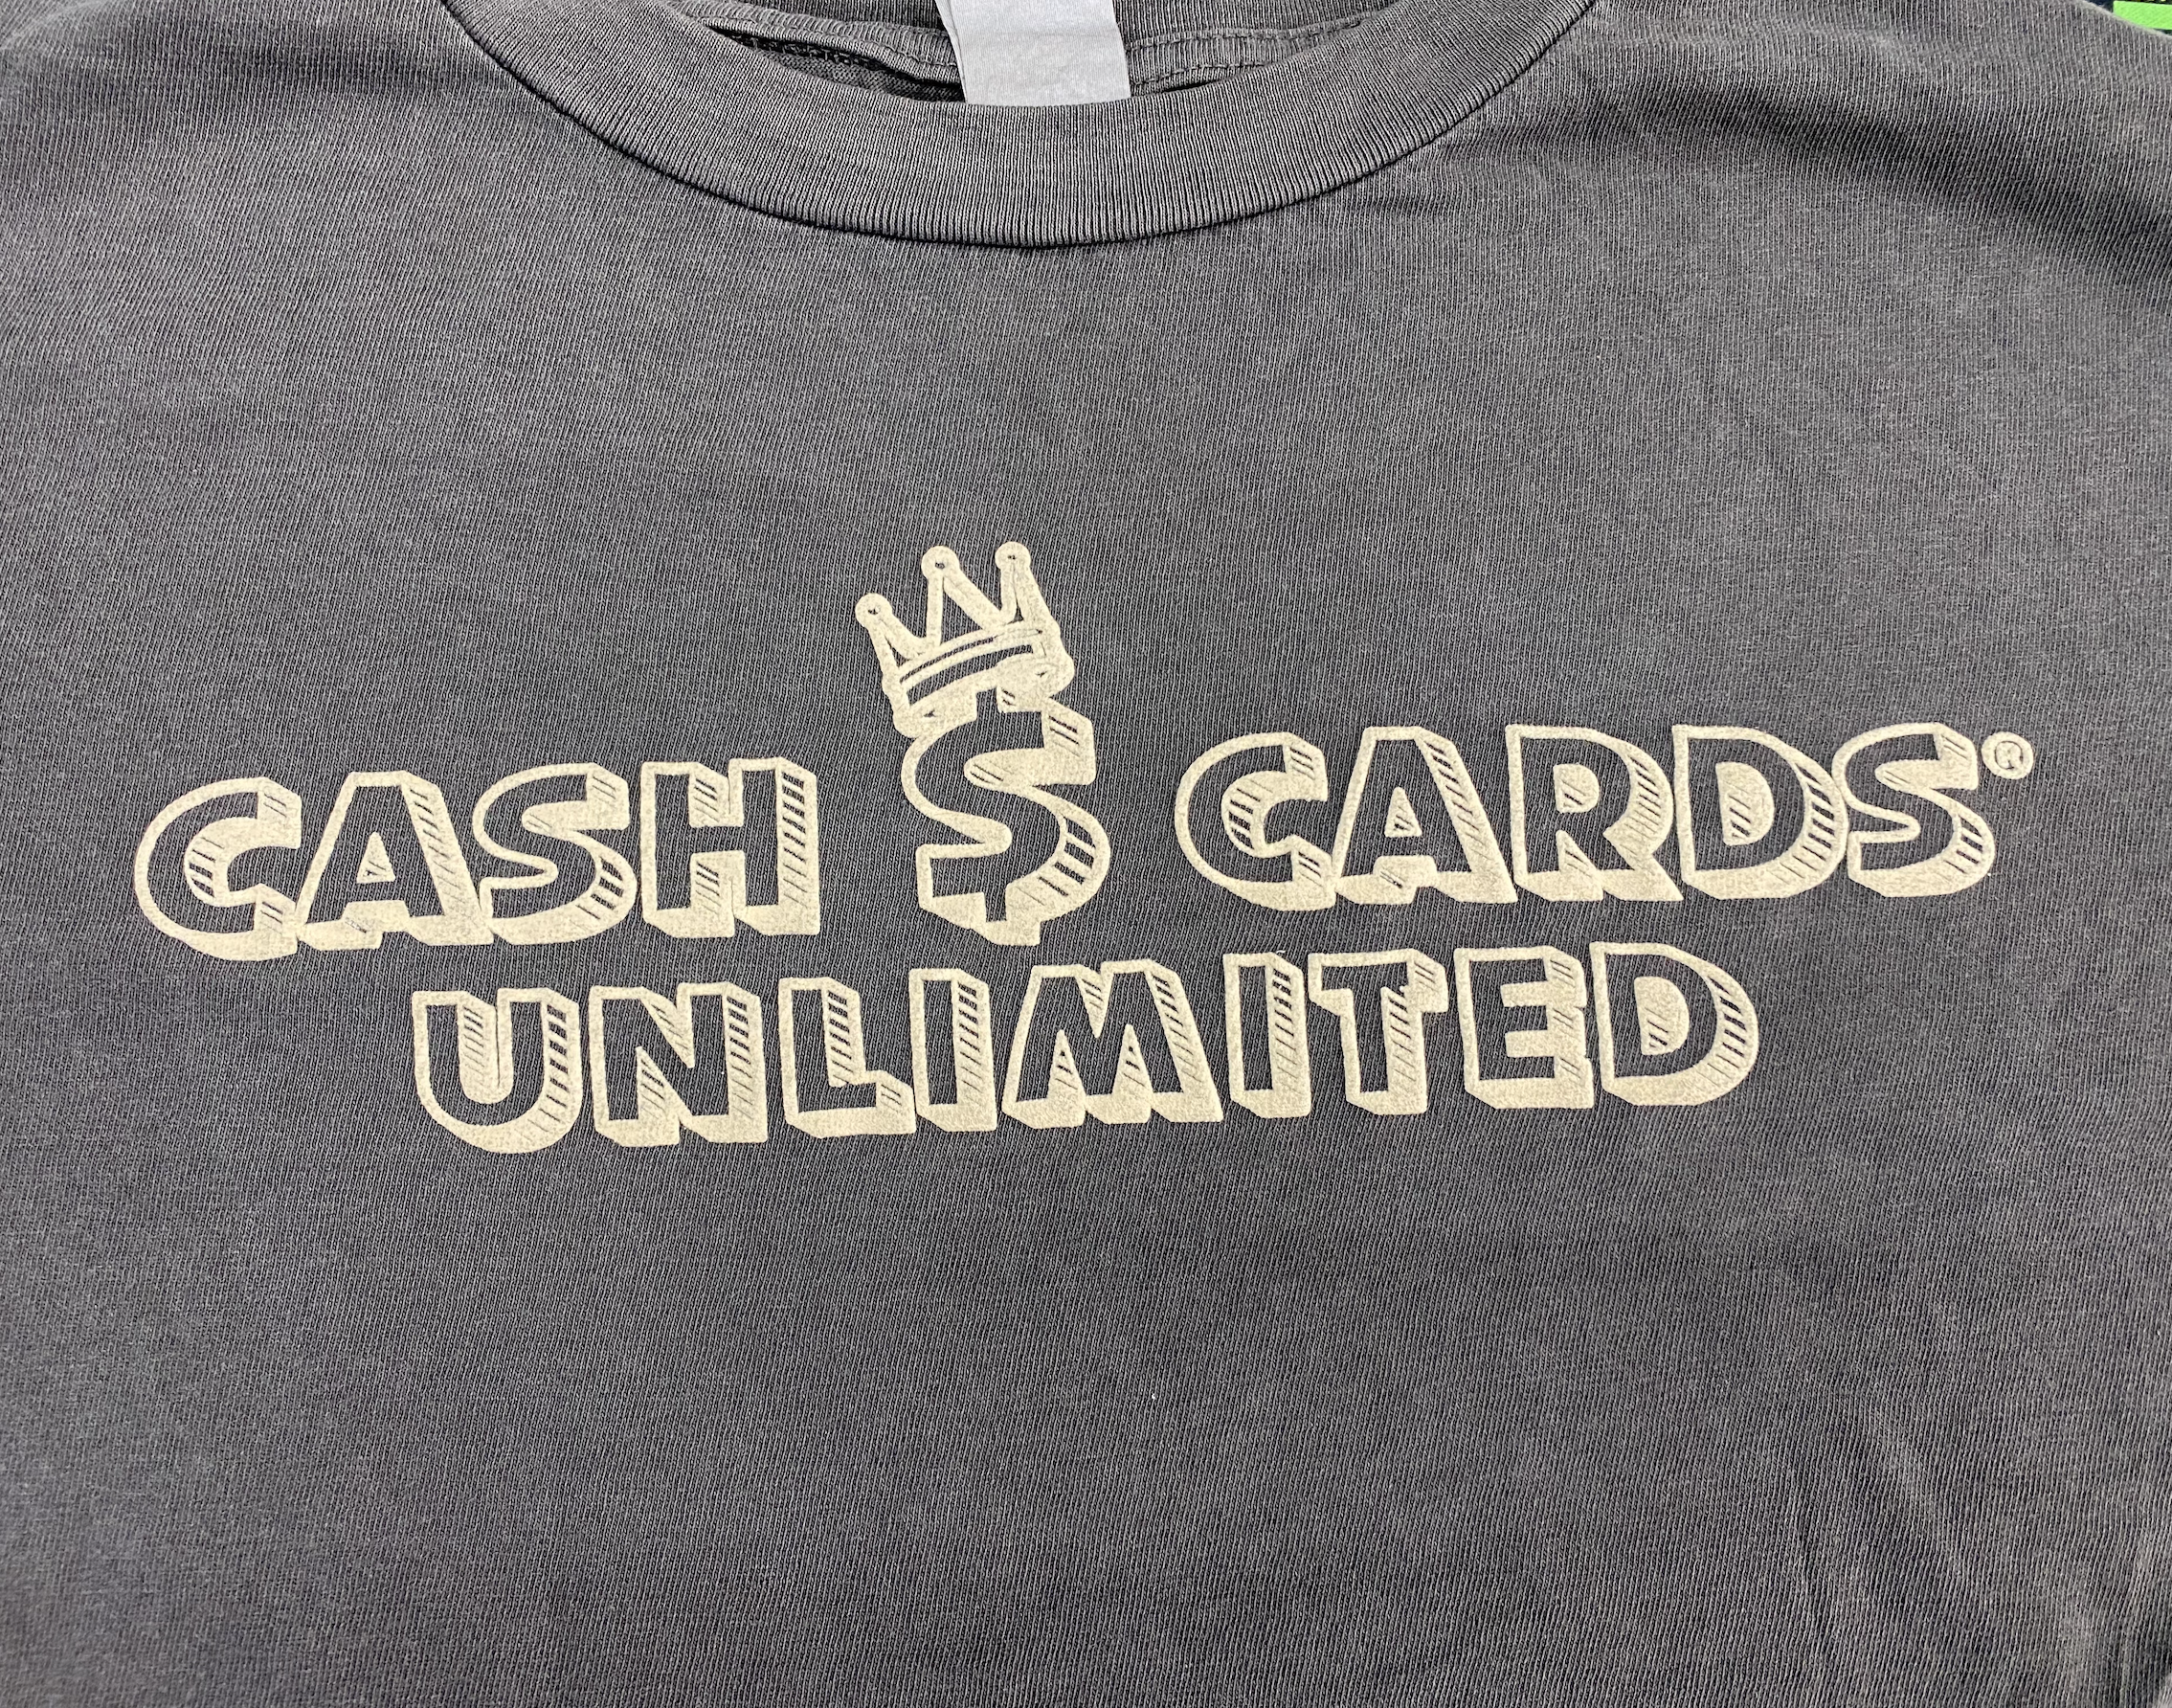 Cash Cards Unlimited Street Wear T-Shirt (Gray/2XL)